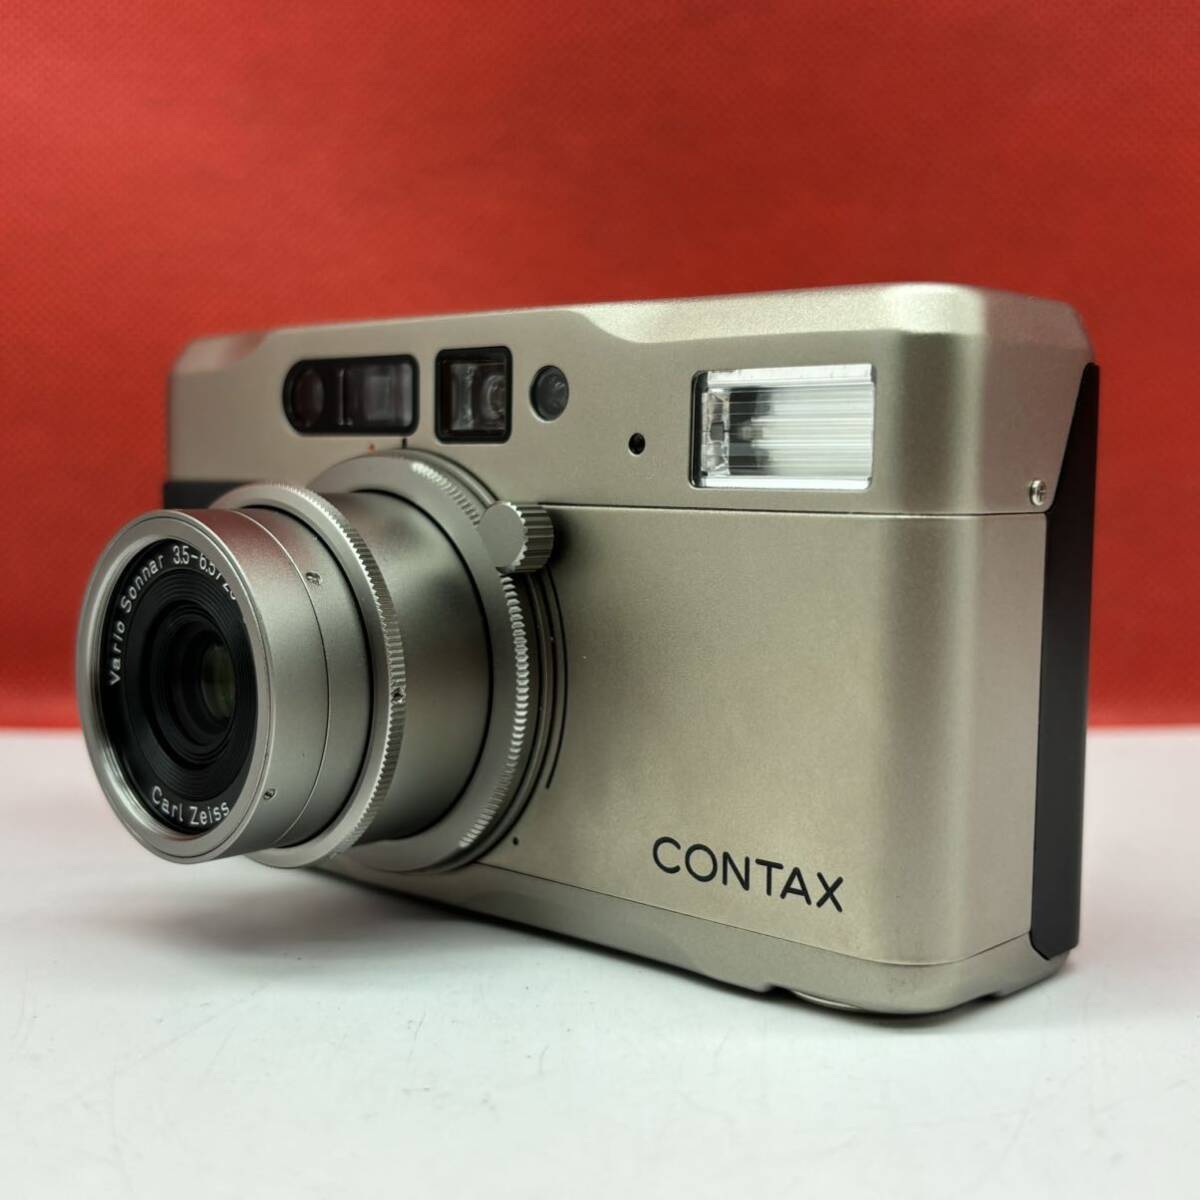 * CONTAX TVS compact film camera Carl Zeiss Vario Sonnar 3.5-6.5/28-56 T* shutter, light meter OK accessory Contax 